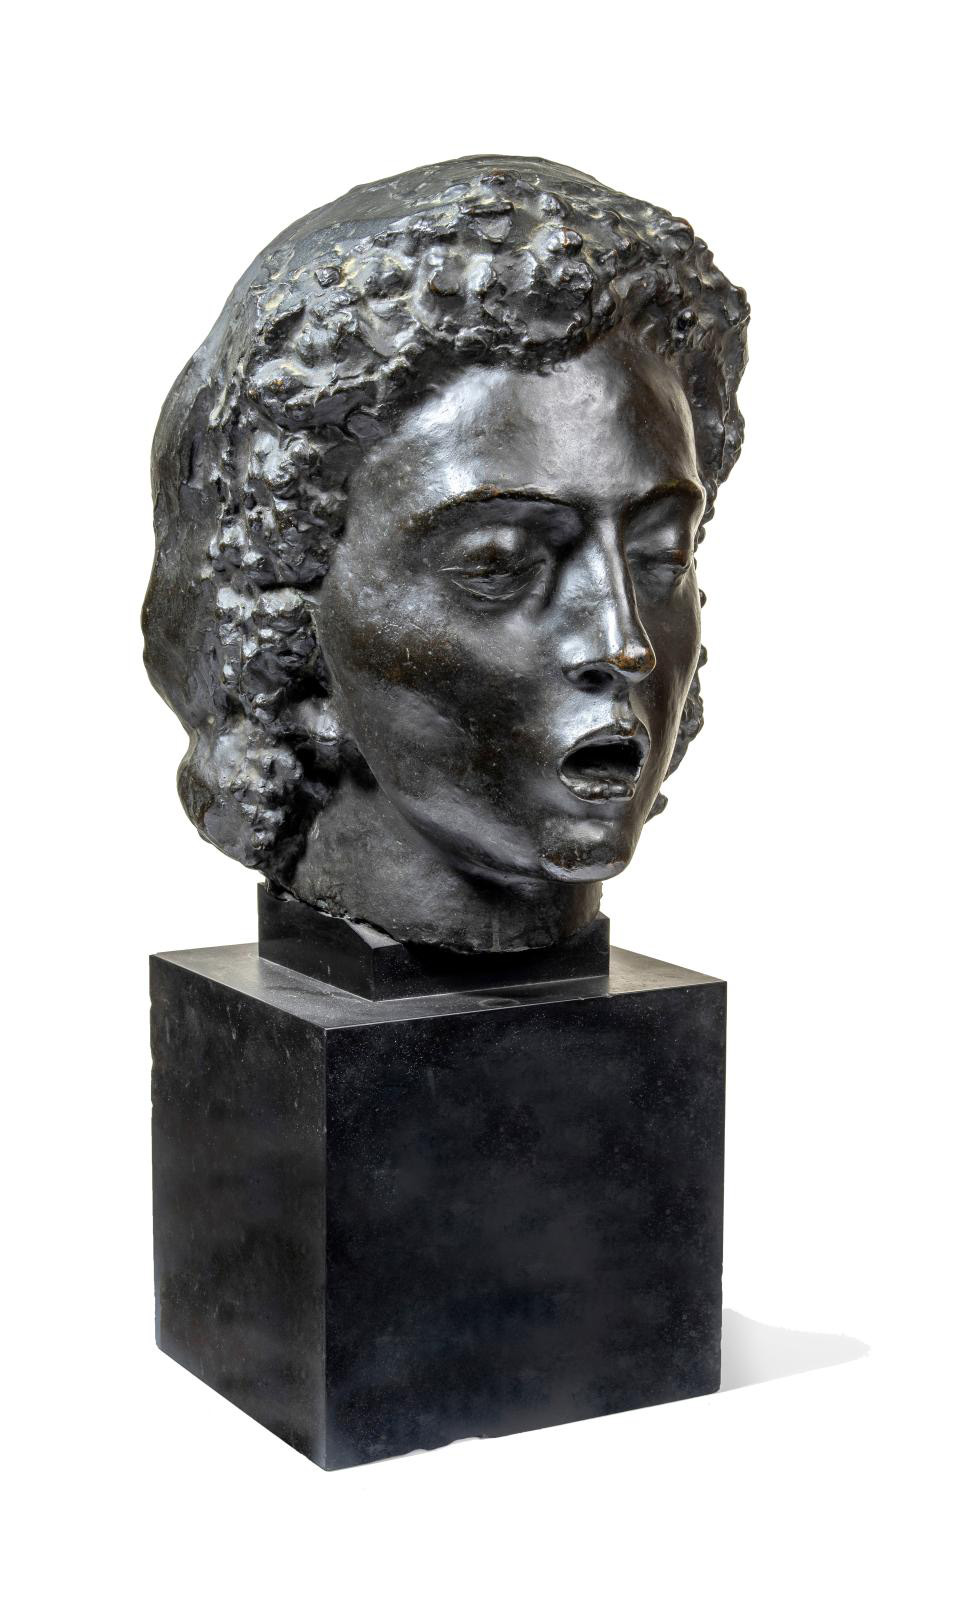 Sculpture in the Spotlight at the Nicolas Bourriaud Gallery